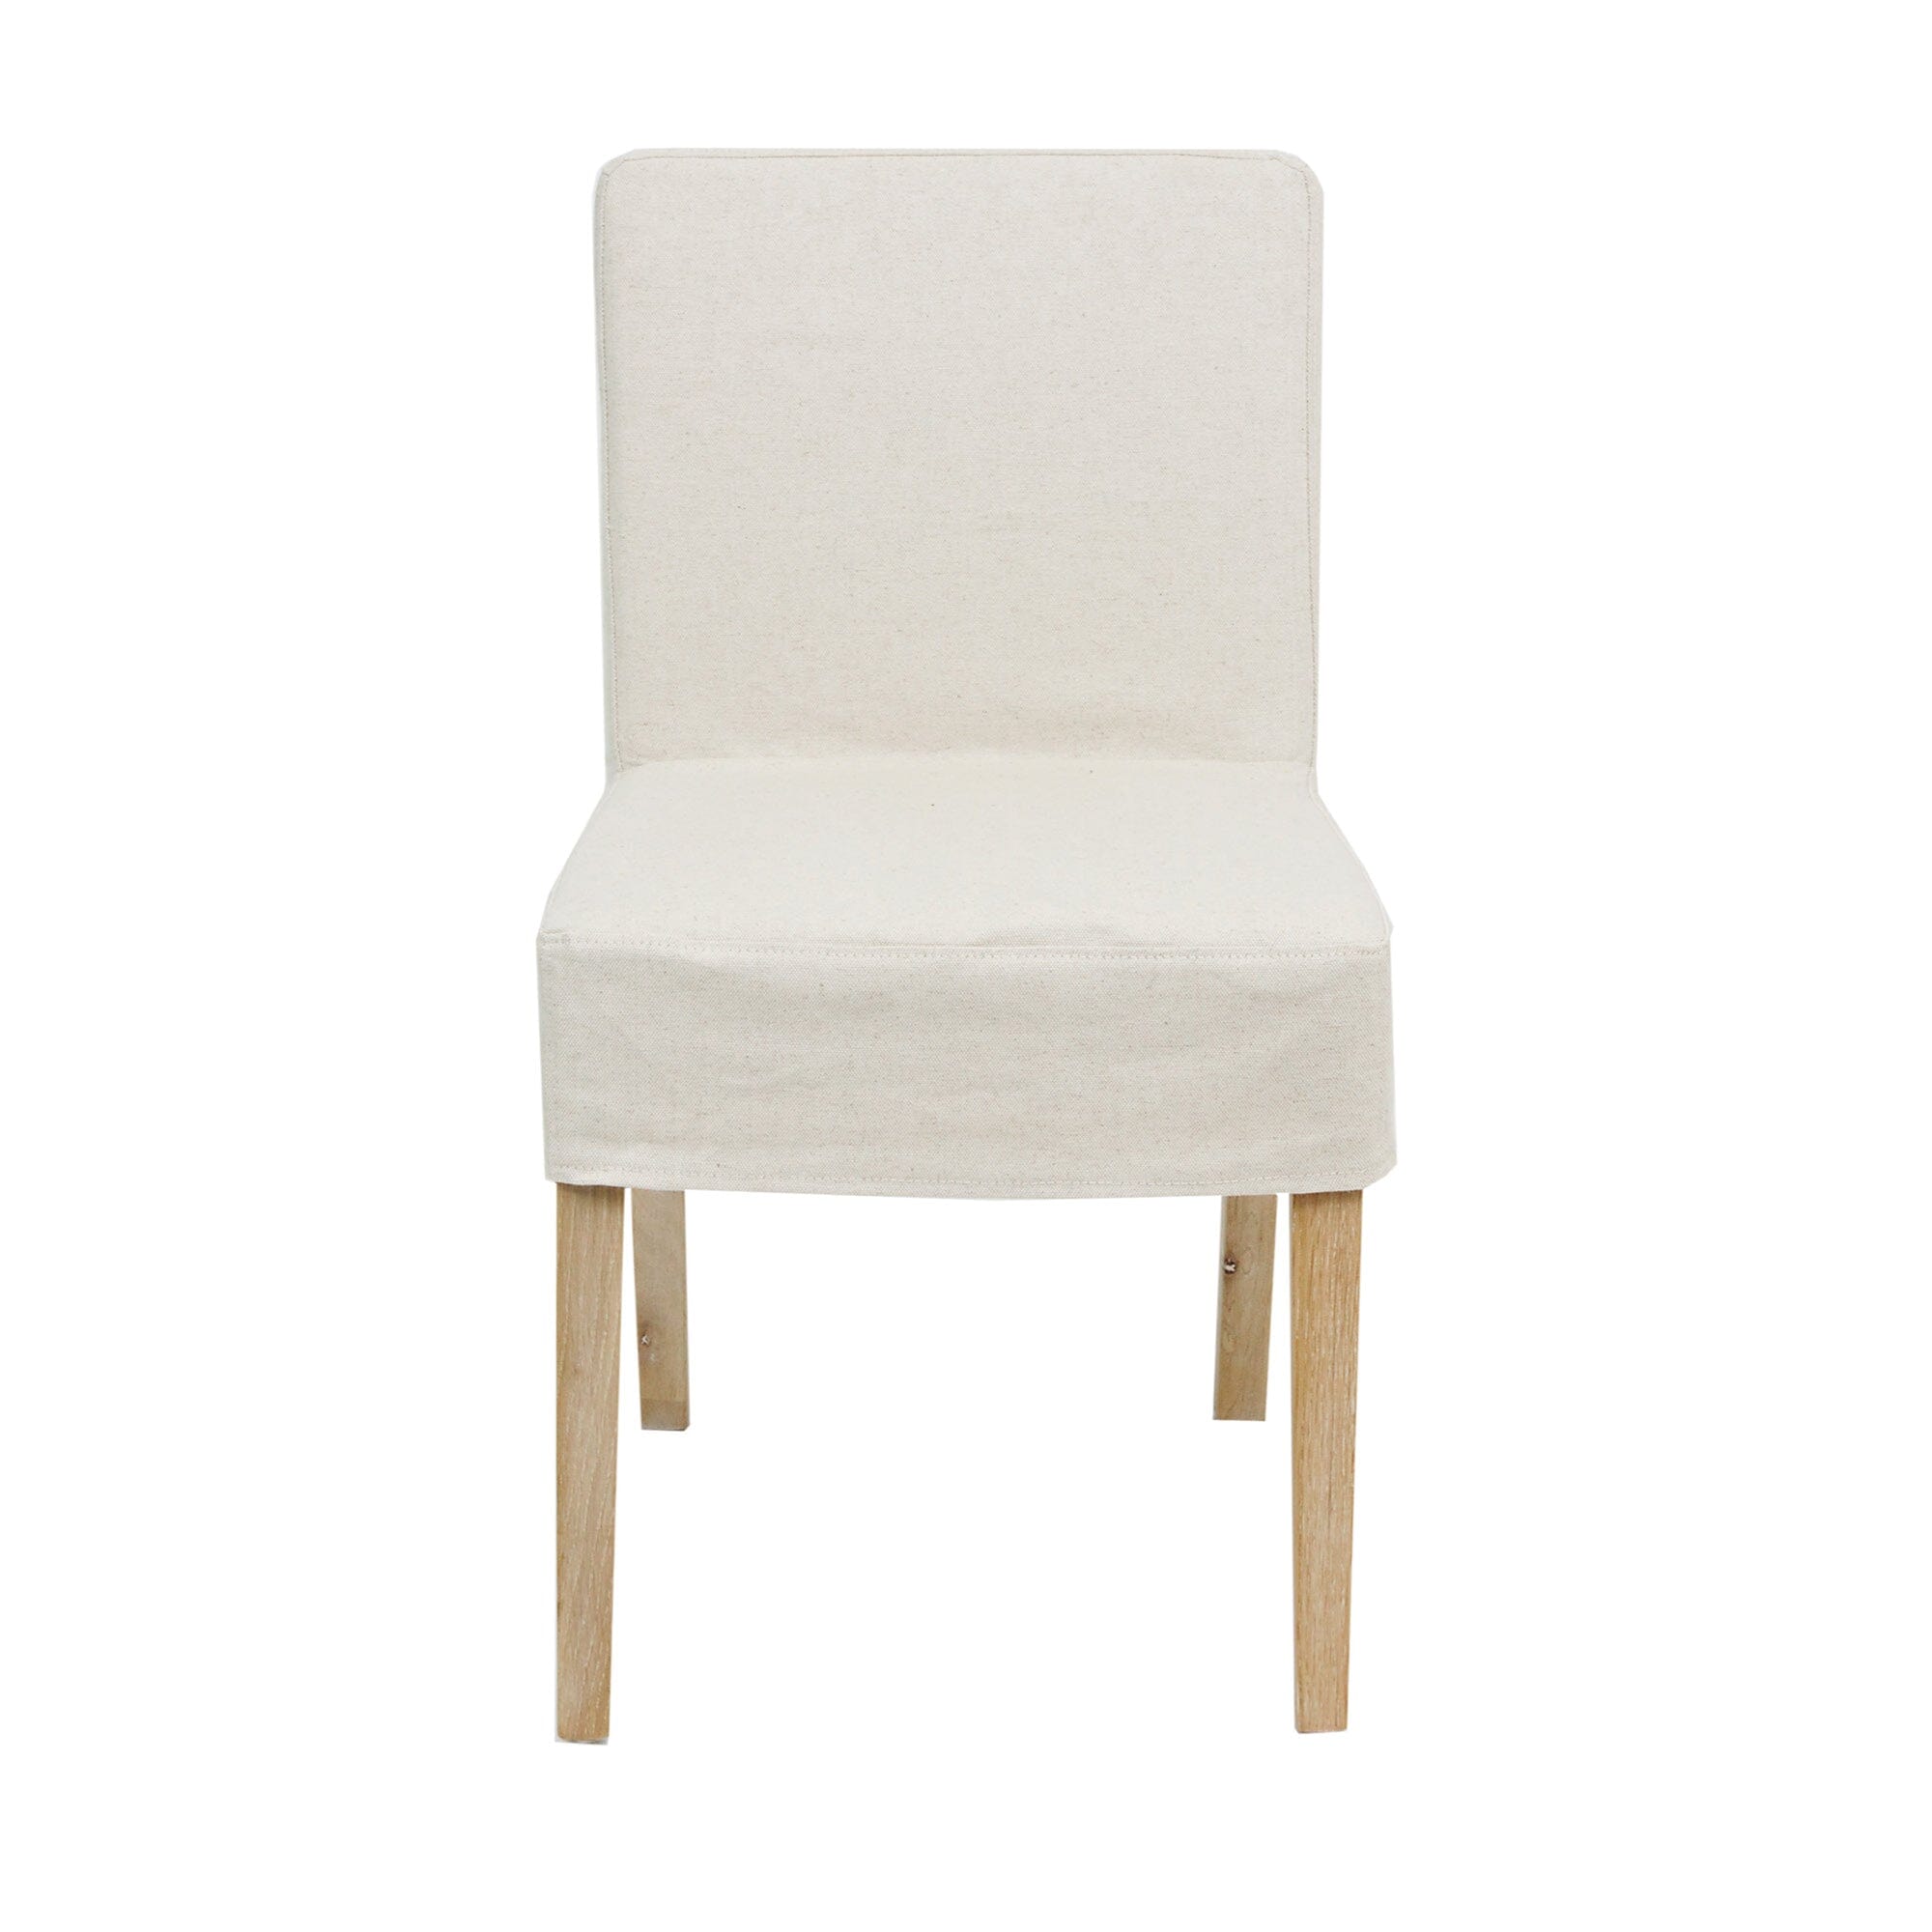 Collaroy Low Back Chair Dining Furniture Beachwood Designs Salt &amp; Pepper Linen Cotton 